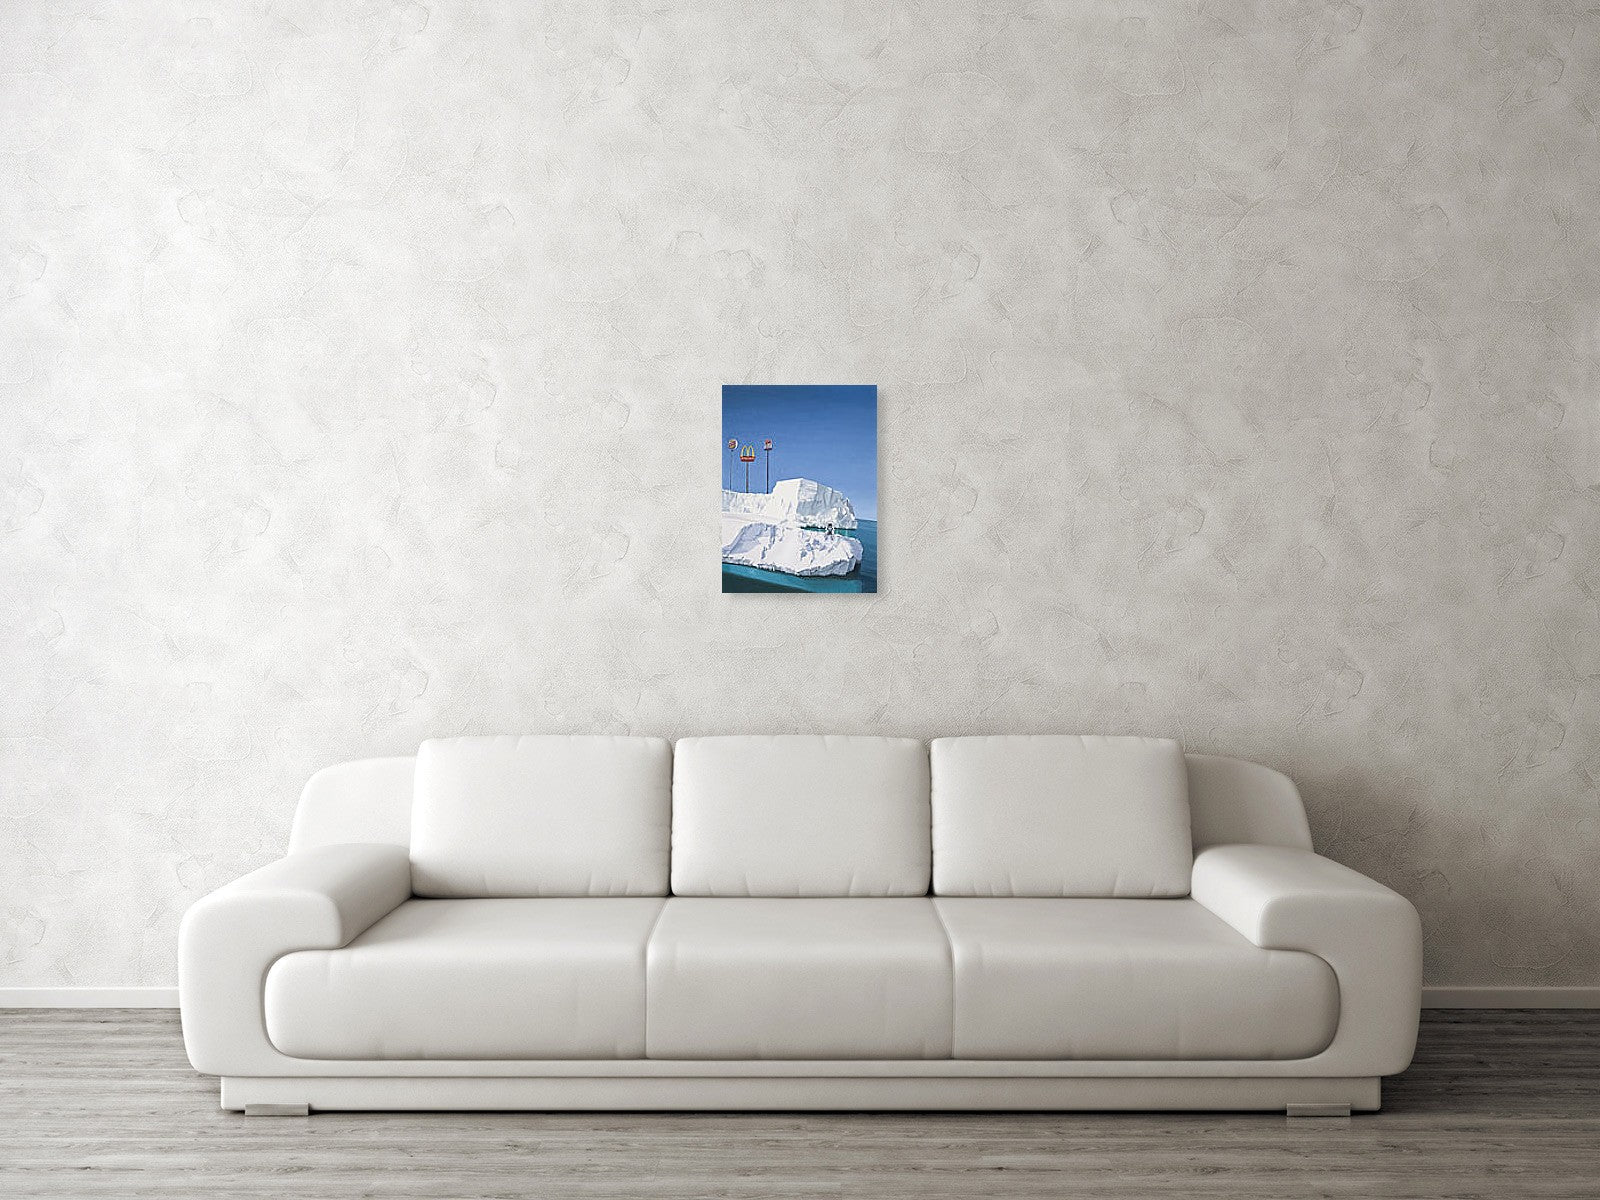 The Iceberg Art Print Canvas And Poster, Warm Home Decor Wall Art Visual Art 1617268375661.jpg